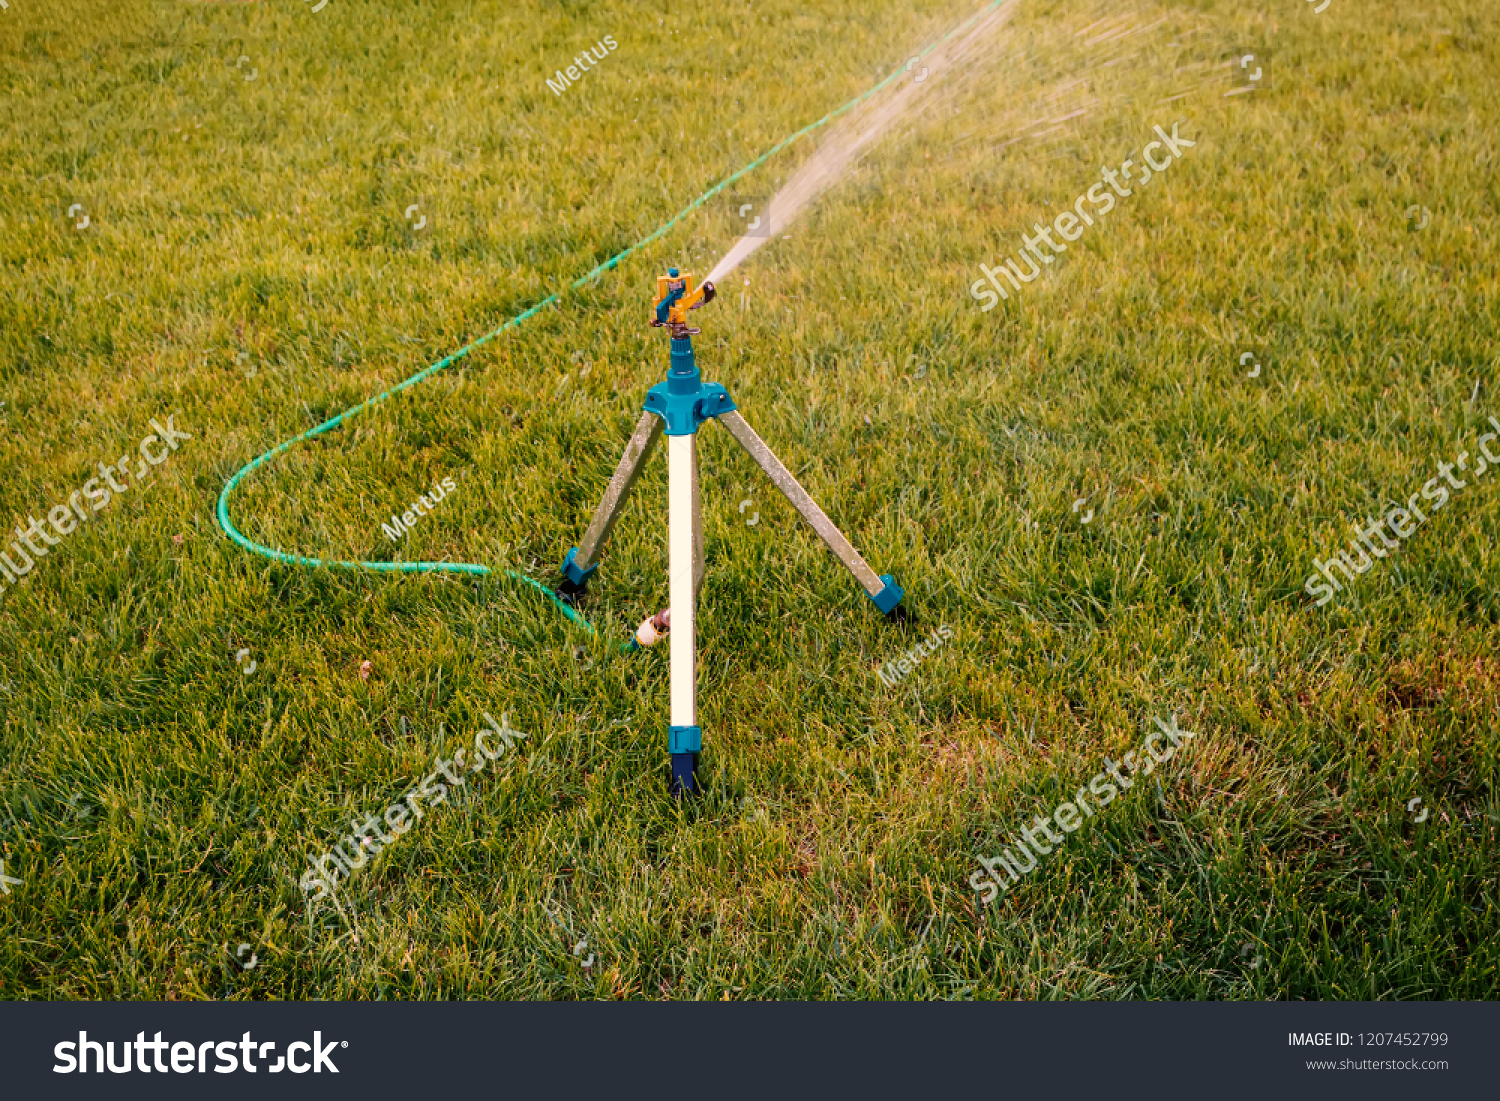 Small tripod sprinkler watering on lawn #1207452799